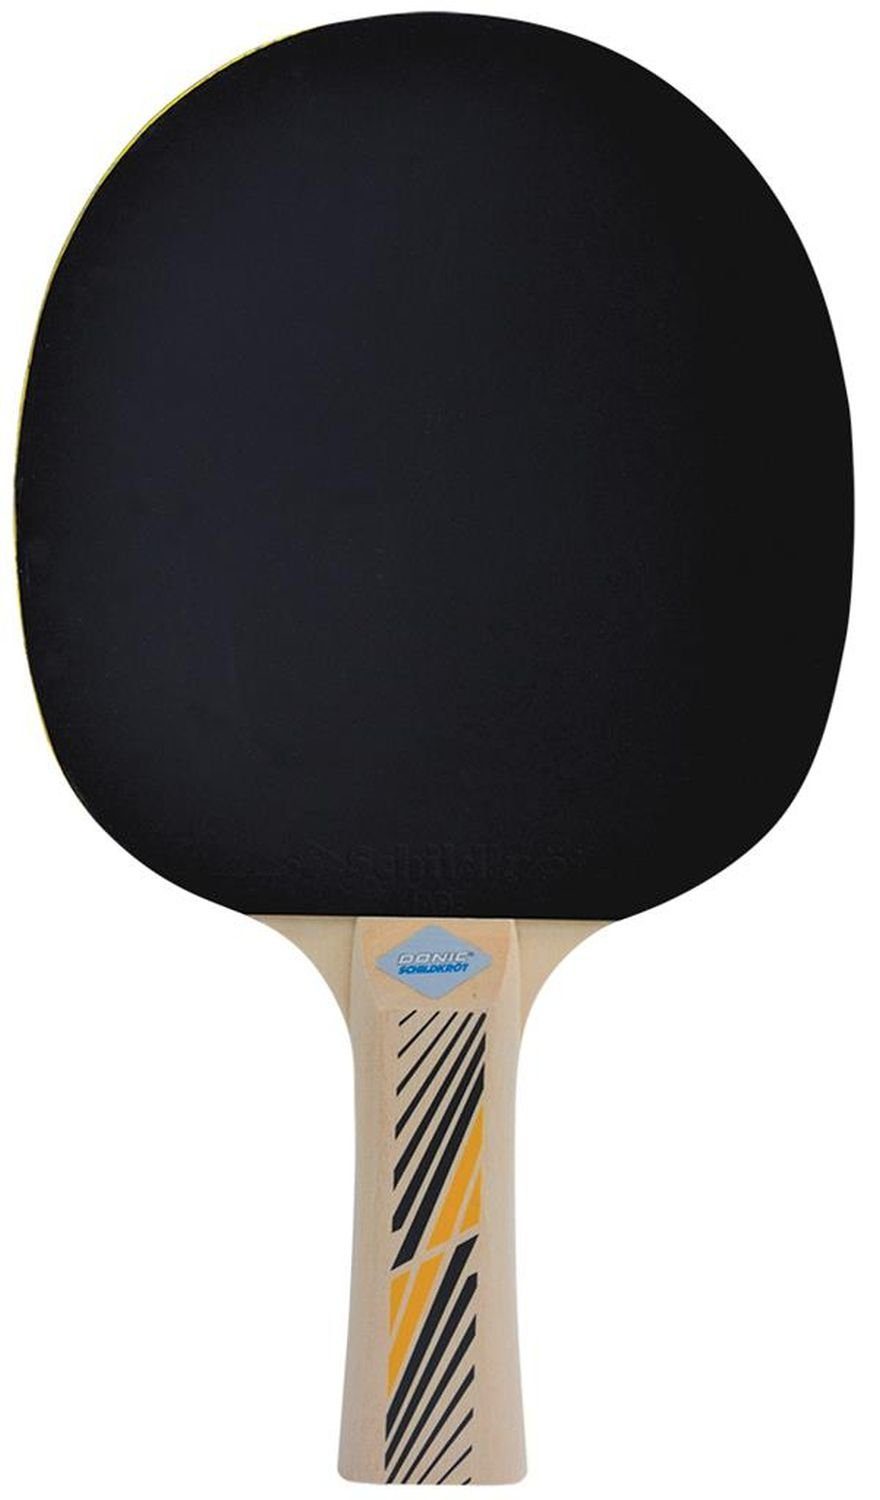 Tischtennisschläger Schläger Tischtennis Tennis Table Racket Donic-Schildkröt Bat 300, Legends